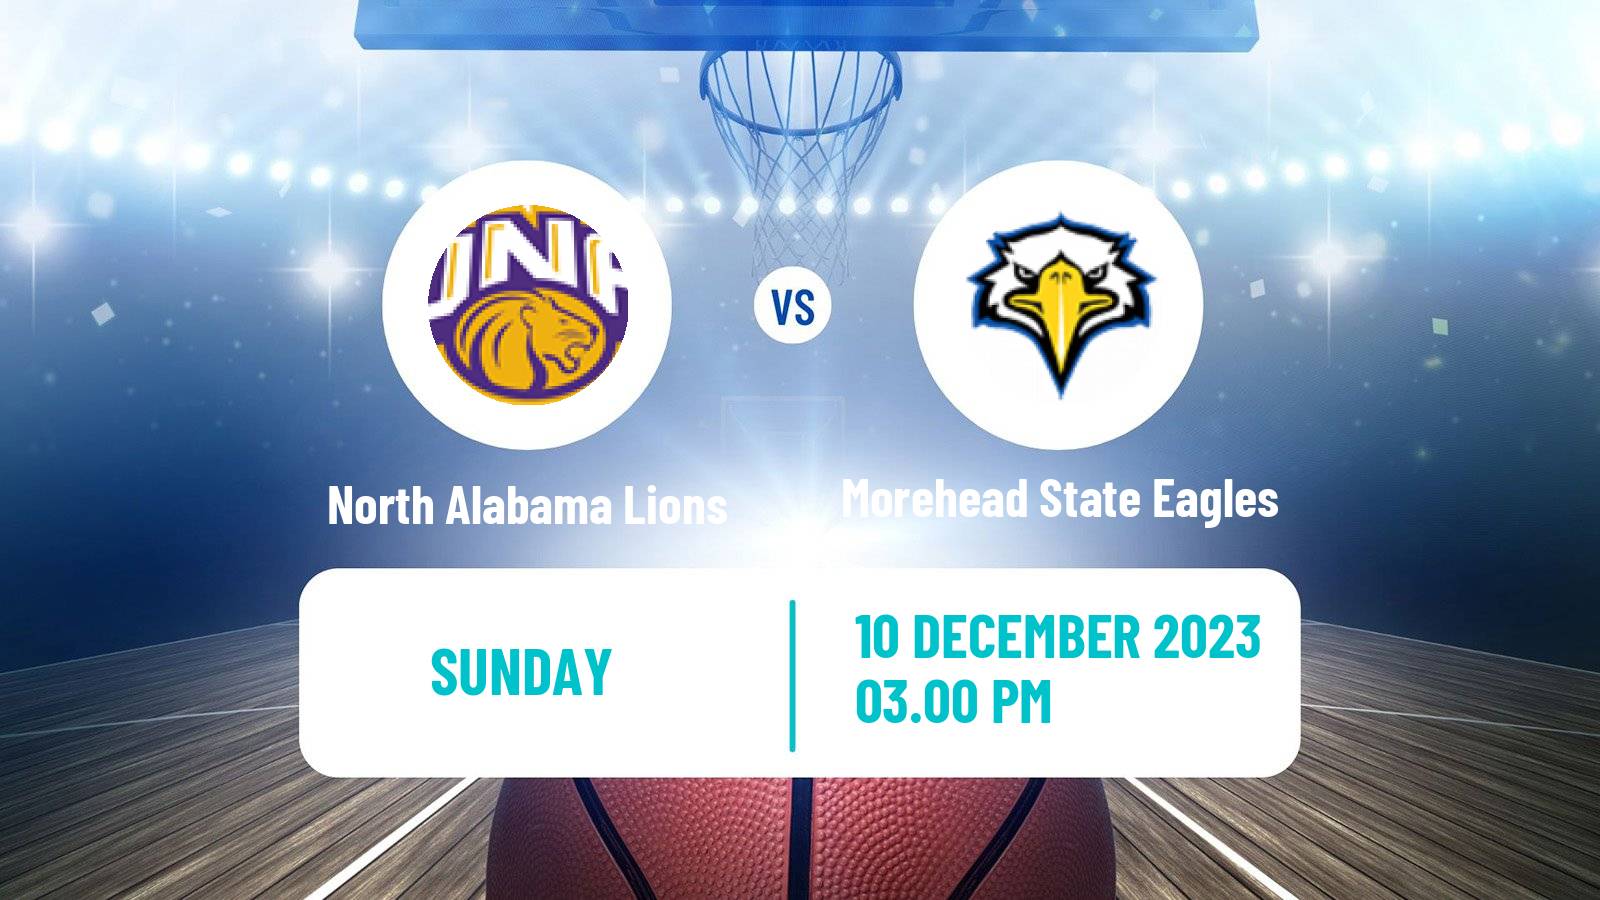 Basketball NCAA College Basketball North Alabama Lions - Morehead State Eagles